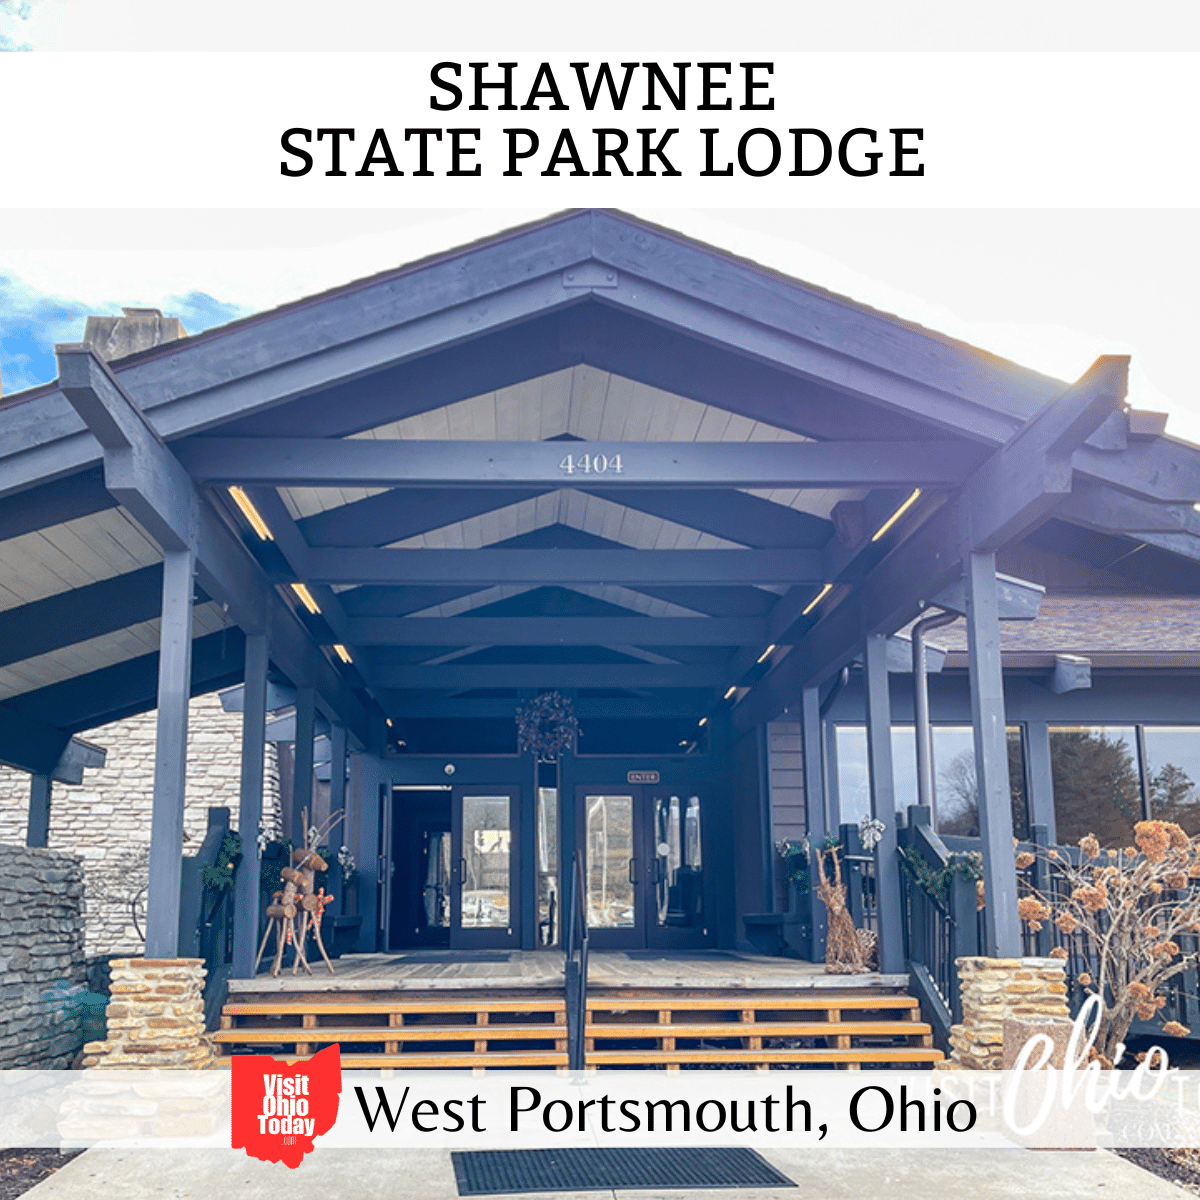 Shawnee State Park Lodge - Visit Ohio Today